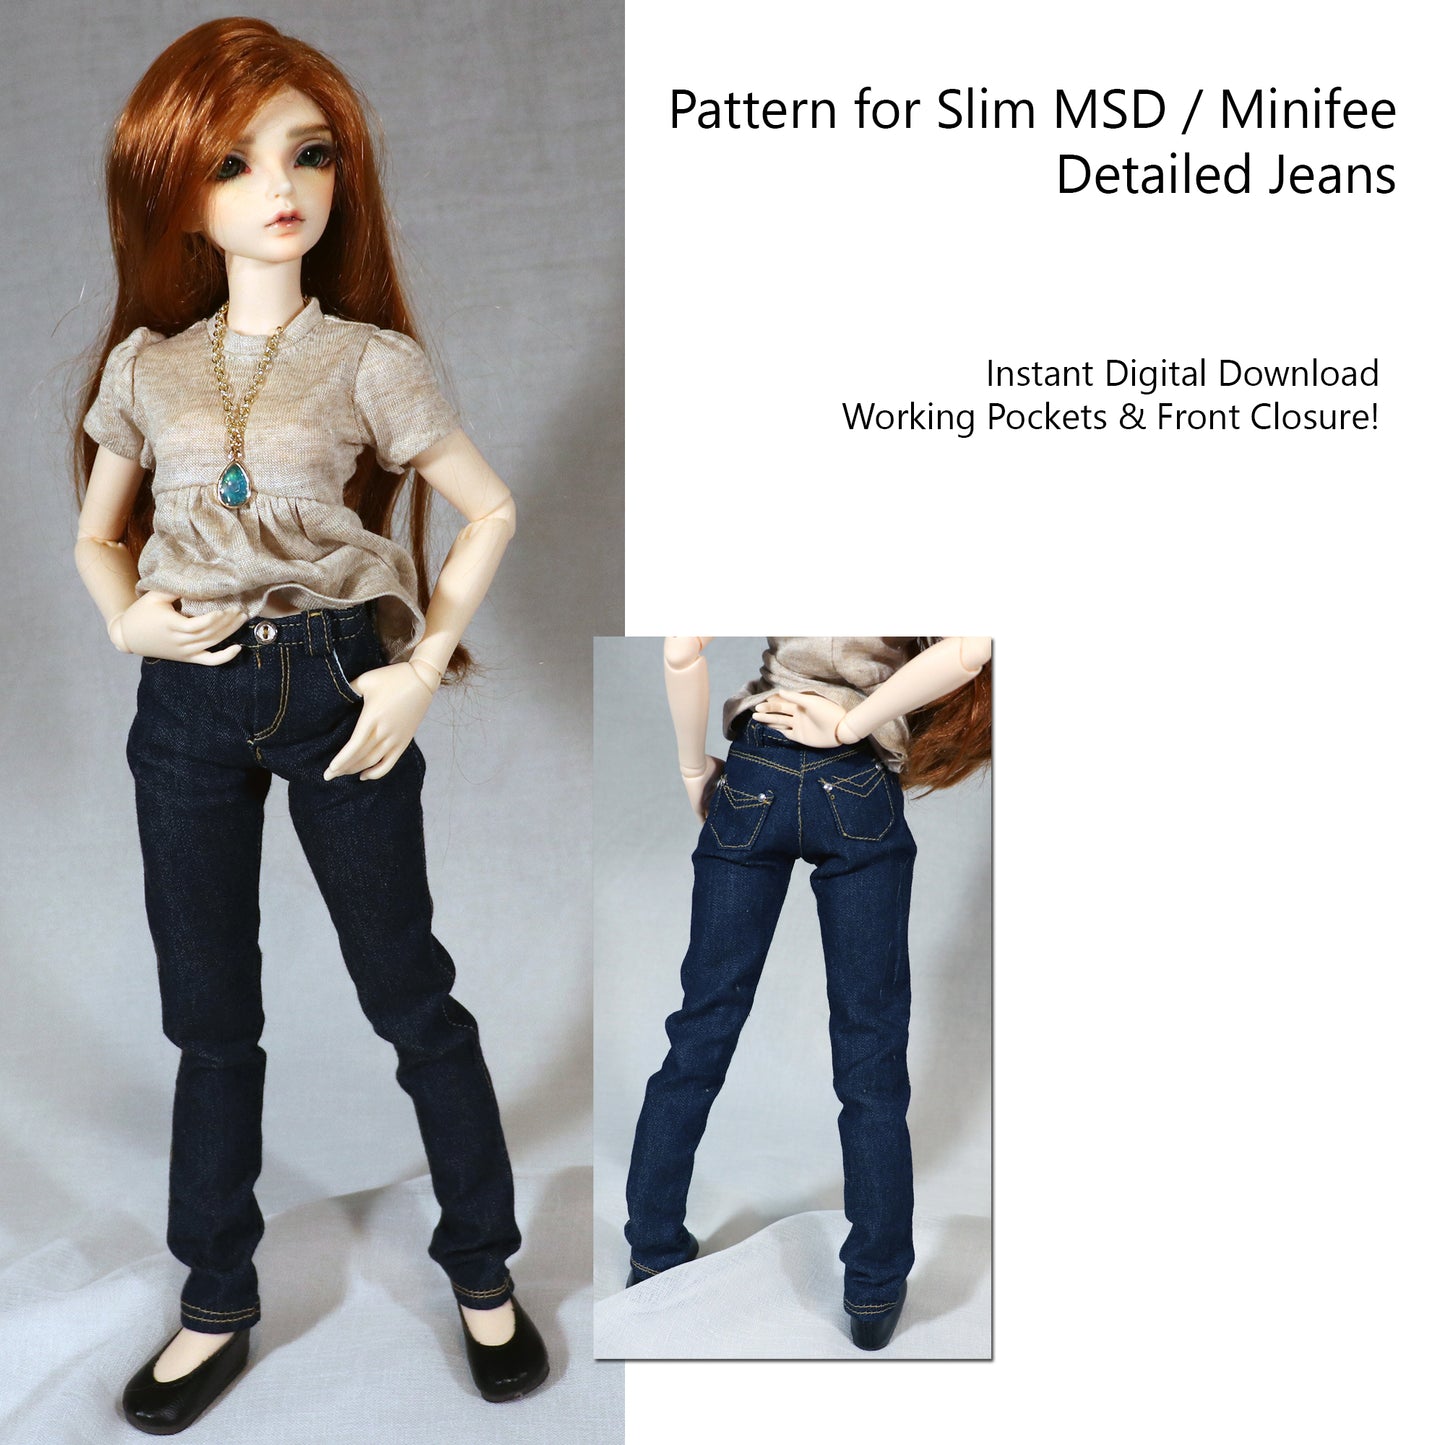 Digital Pattern for Jeans for Slim MSD or Minifee